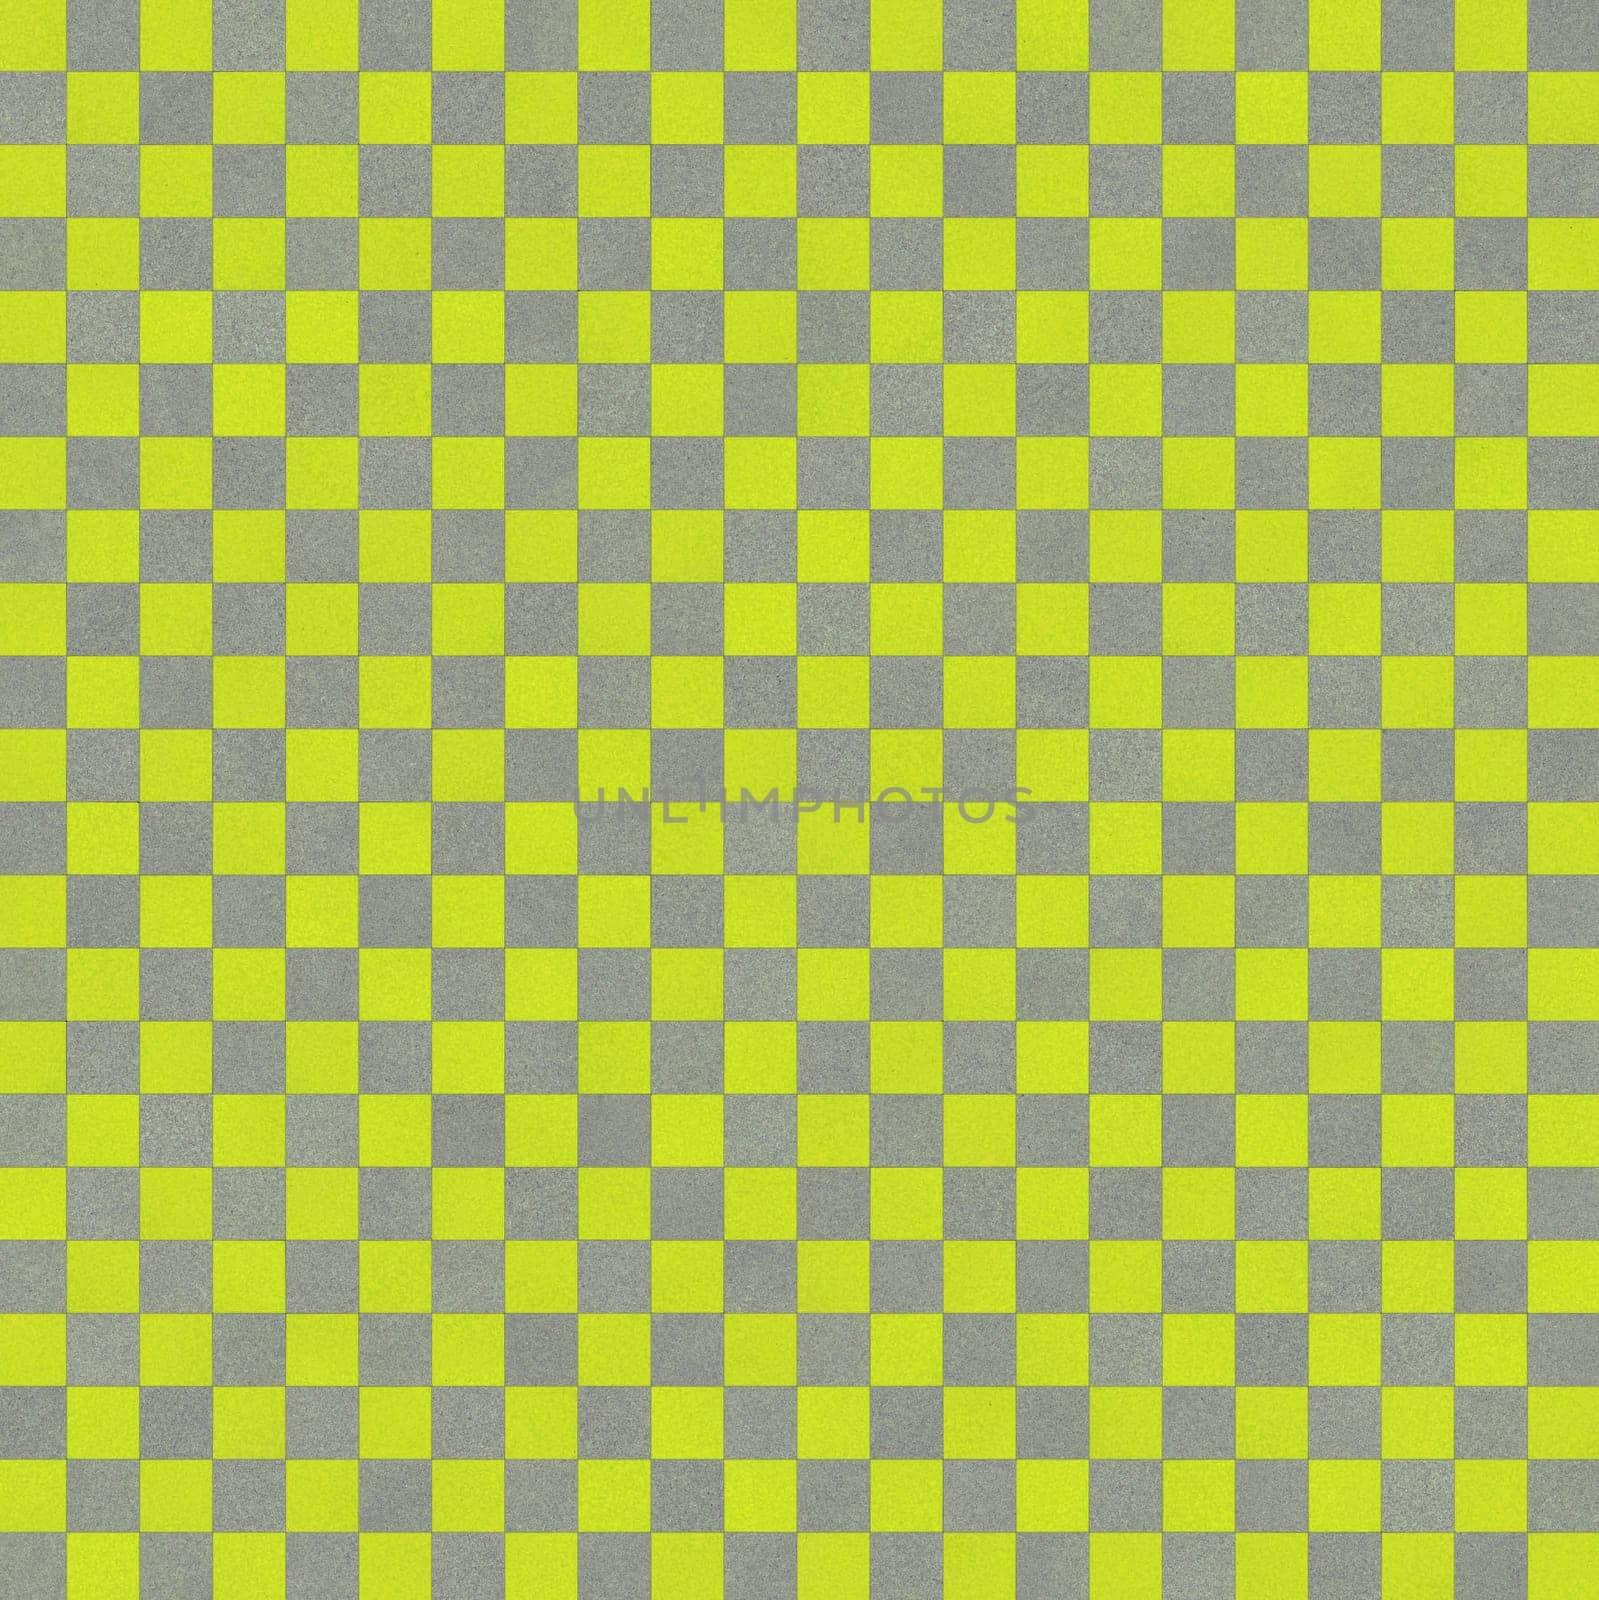 Background image of a yellow chess pattern by Mastak80